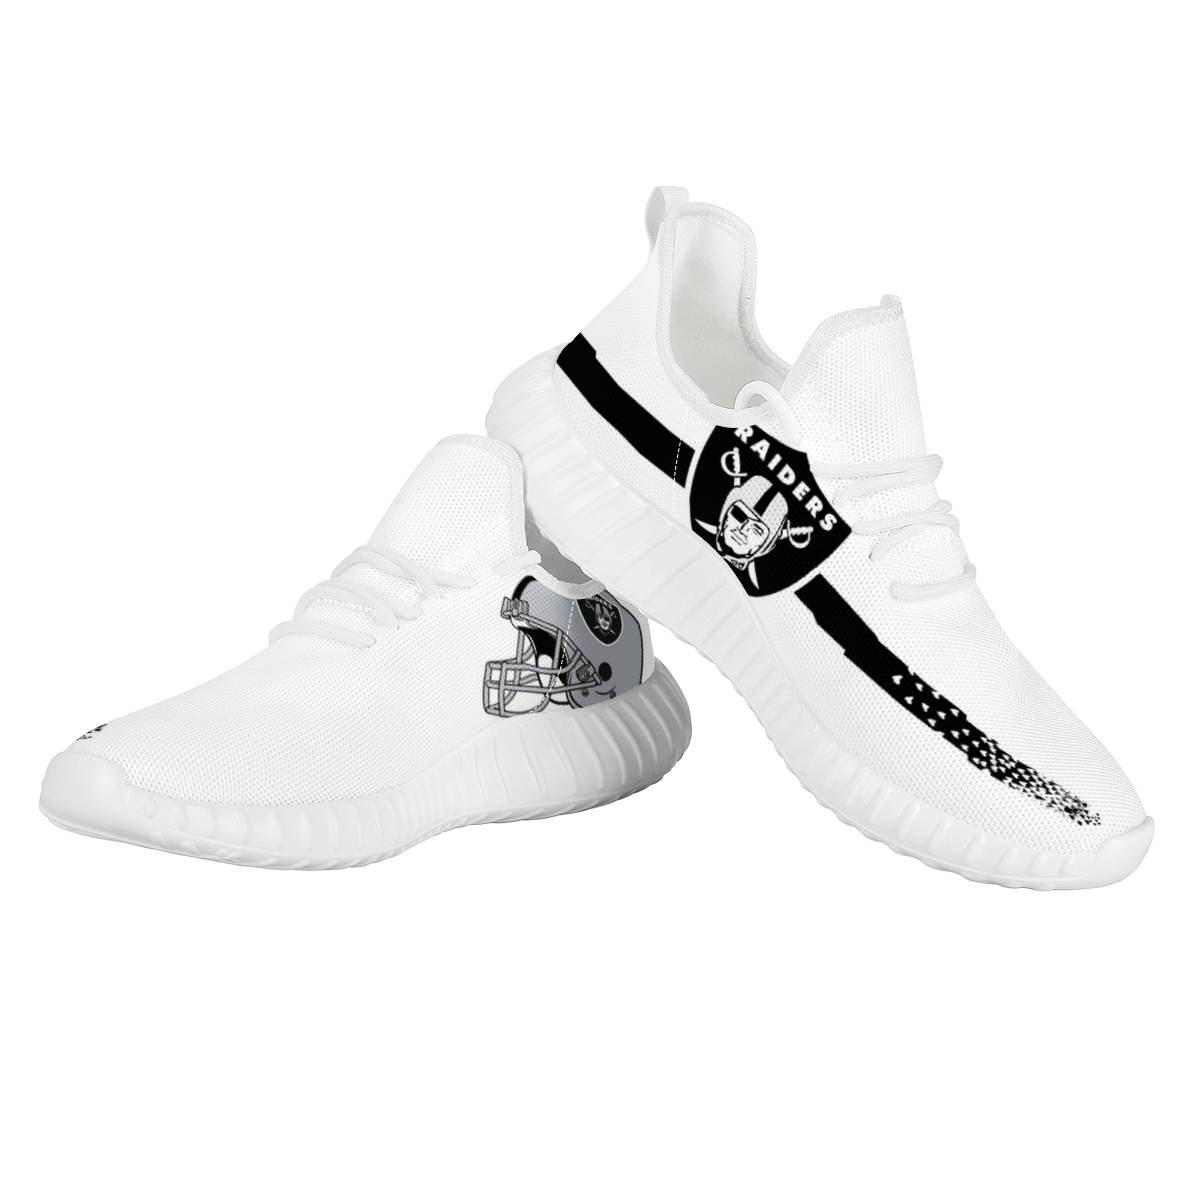 Men's Las Vegas Raiders Mesh Knit Sneakers/Shoes 006